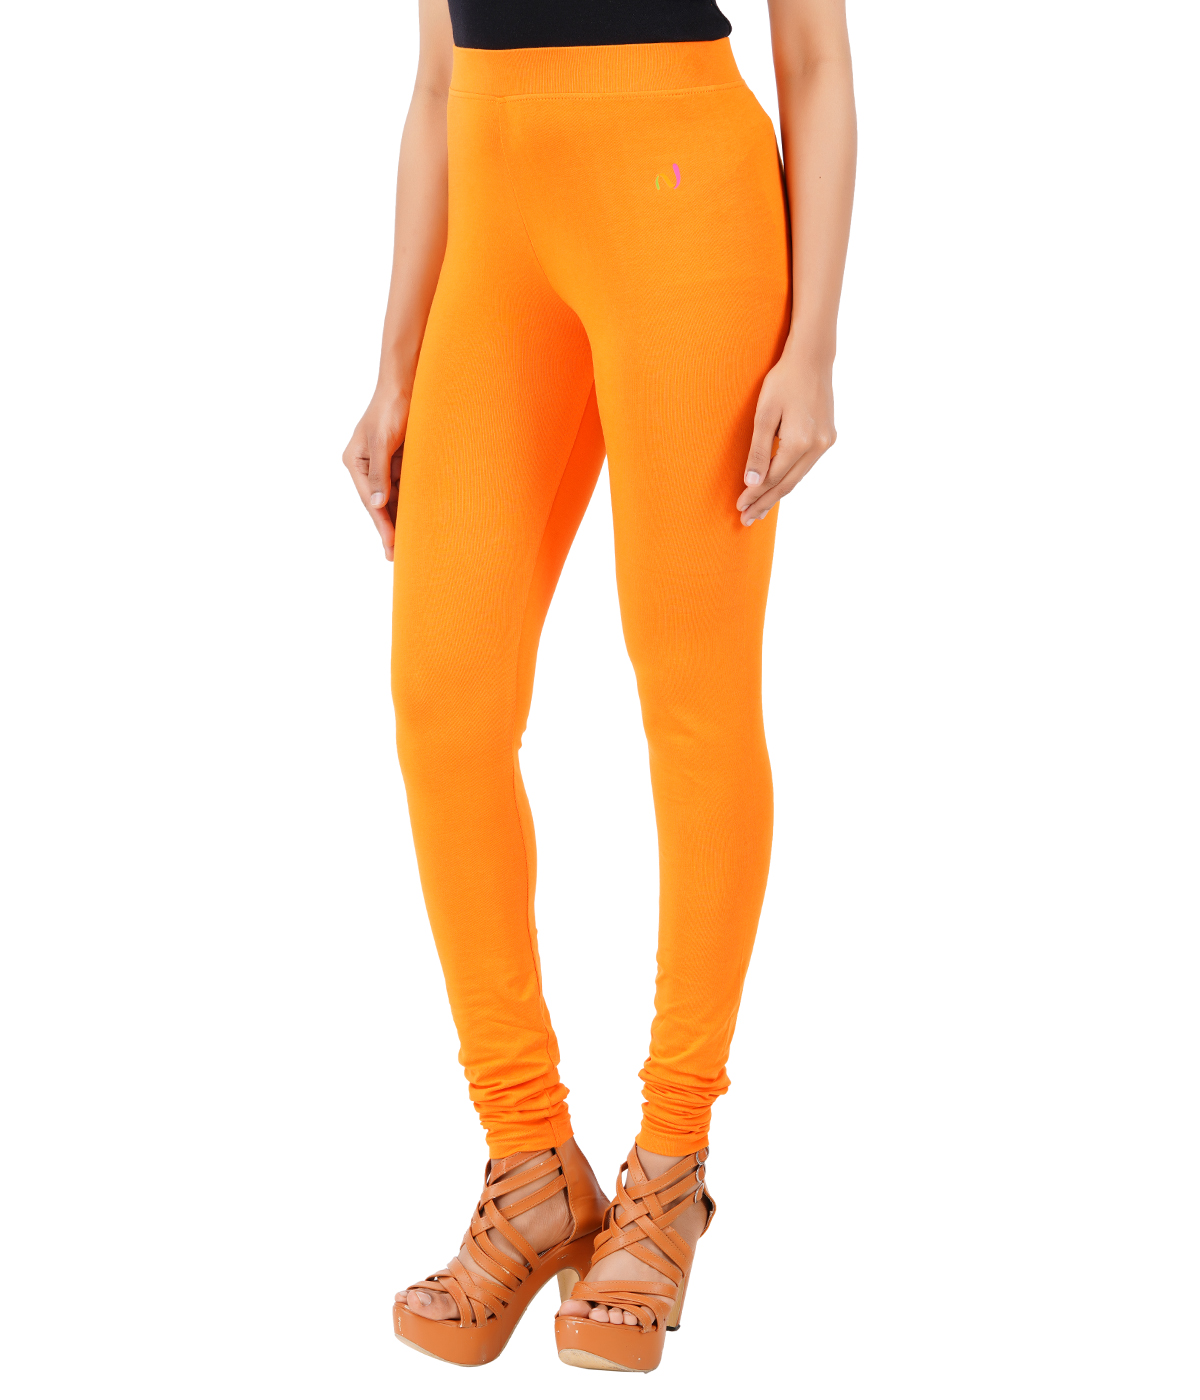 Women's Leggings Vivid Orange